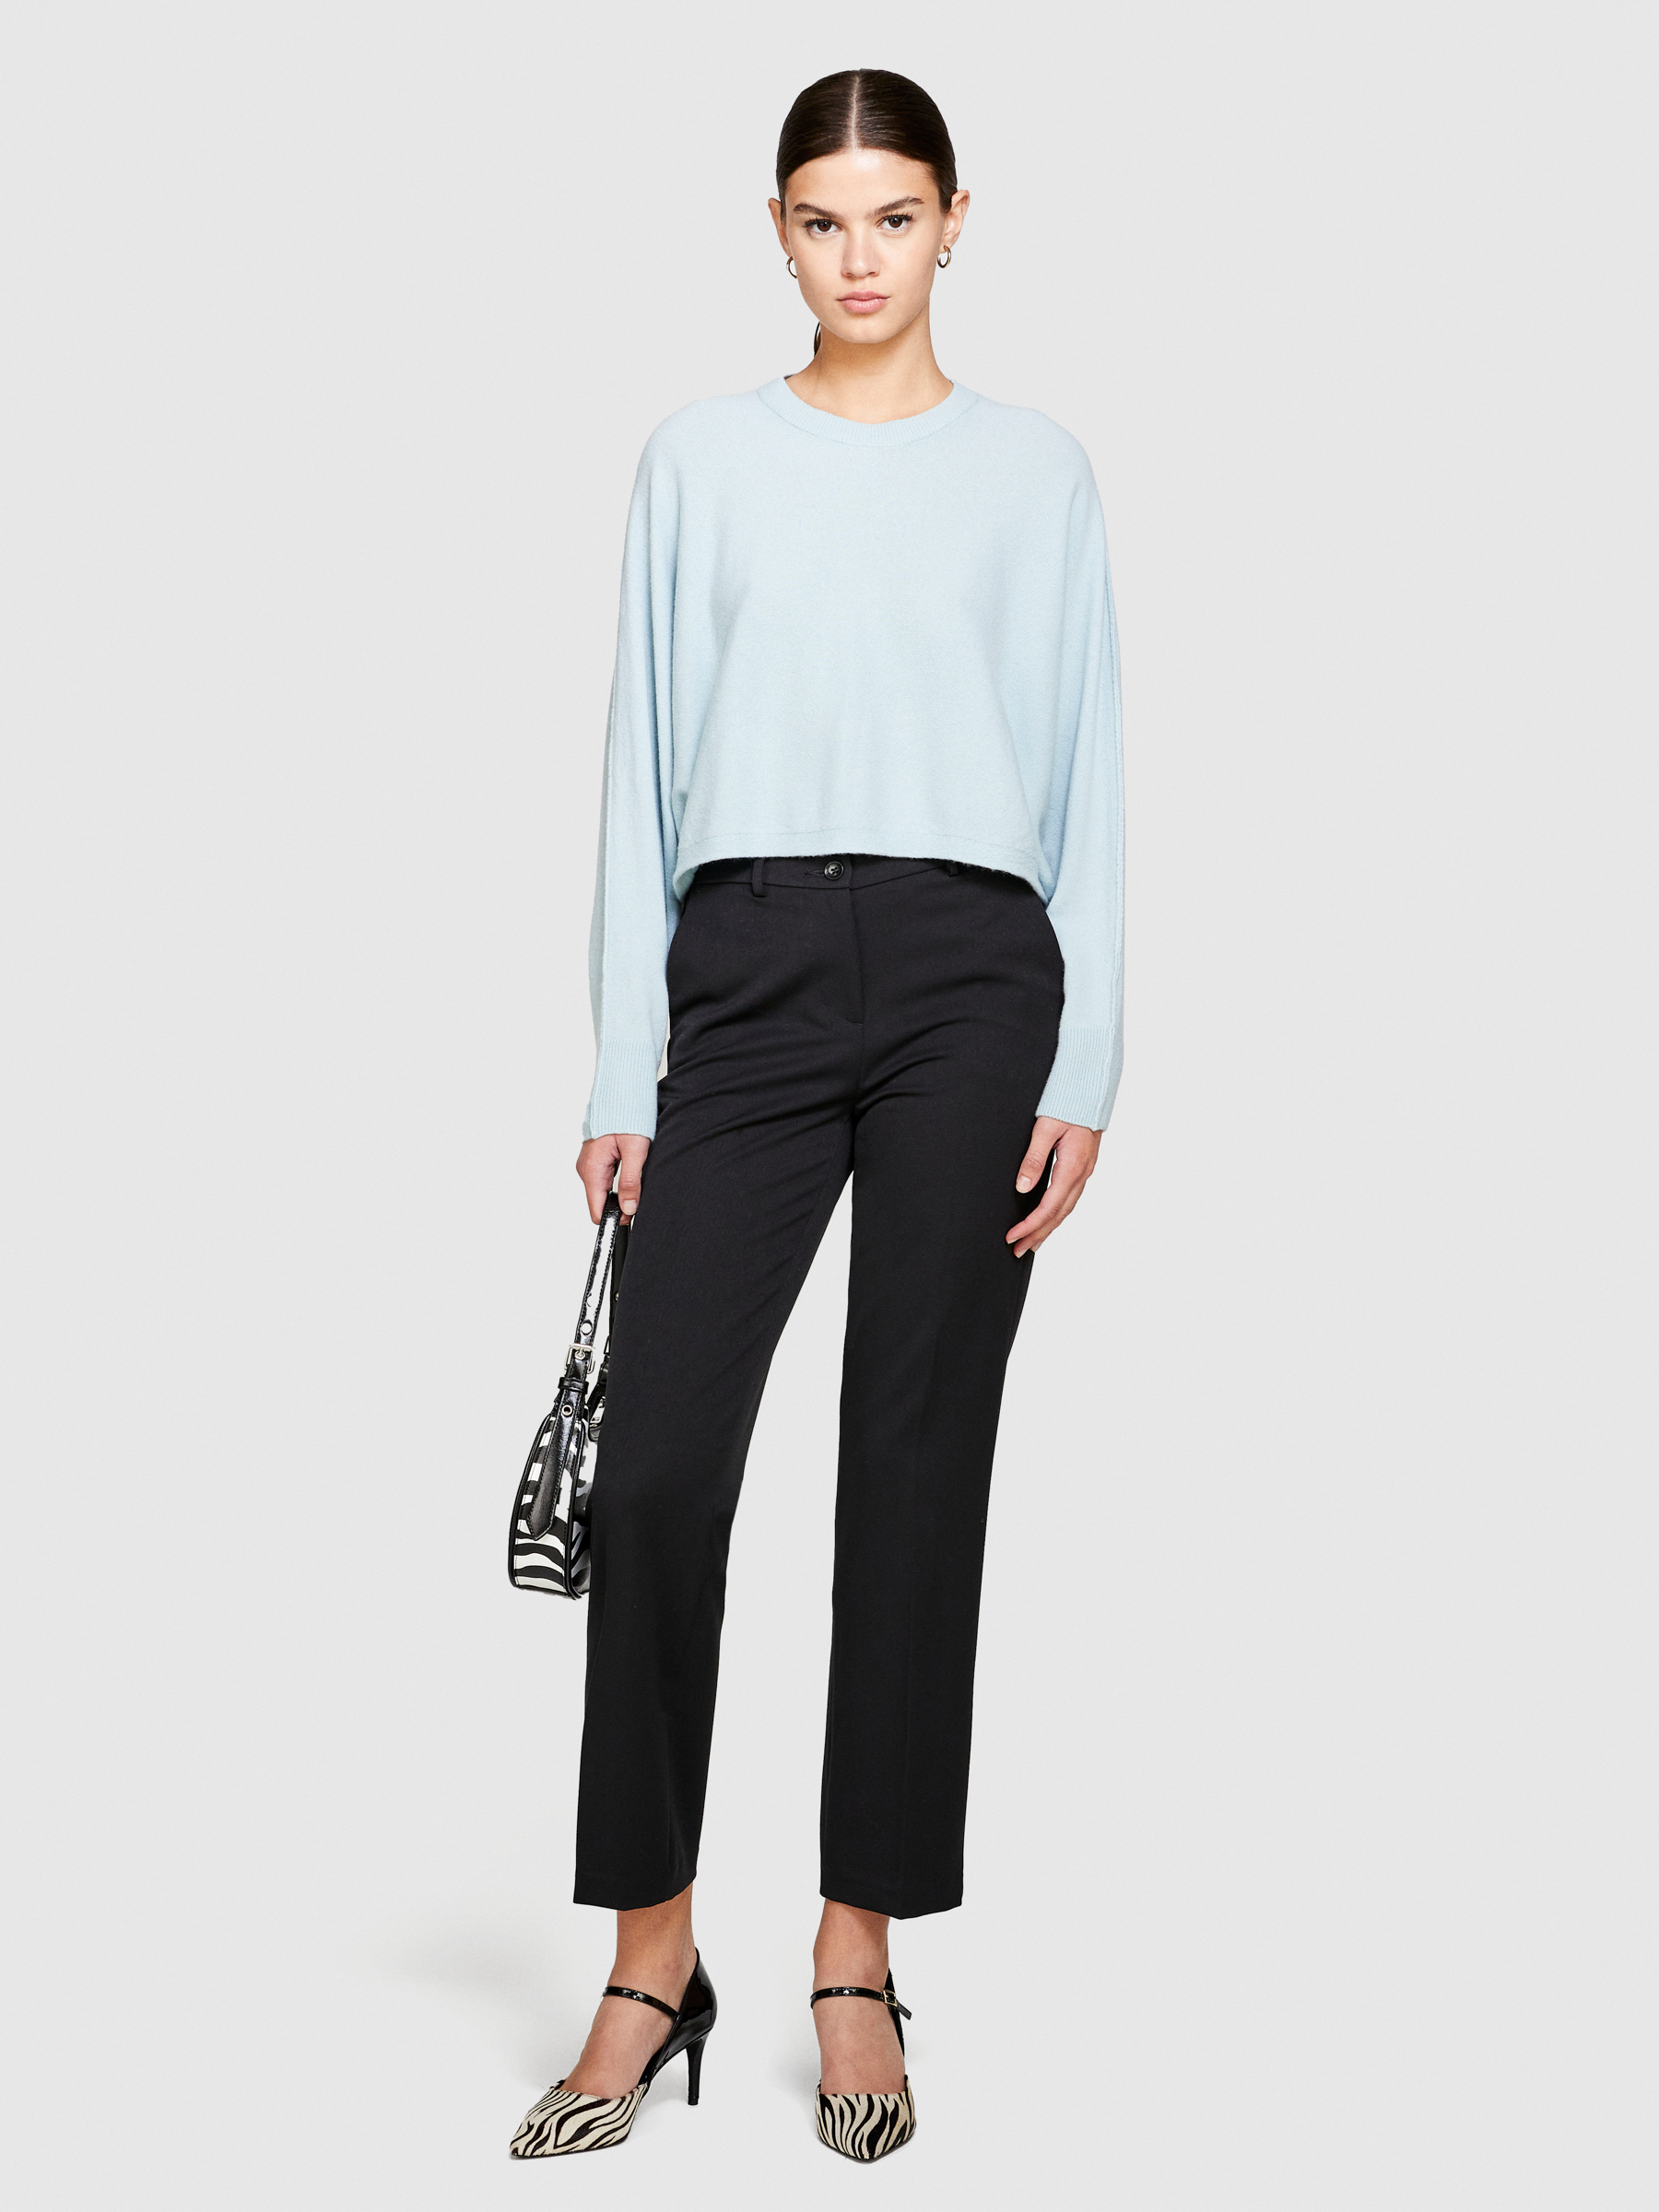 Sisley - Cropped Sweater, Woman, Light Blue, Size: S